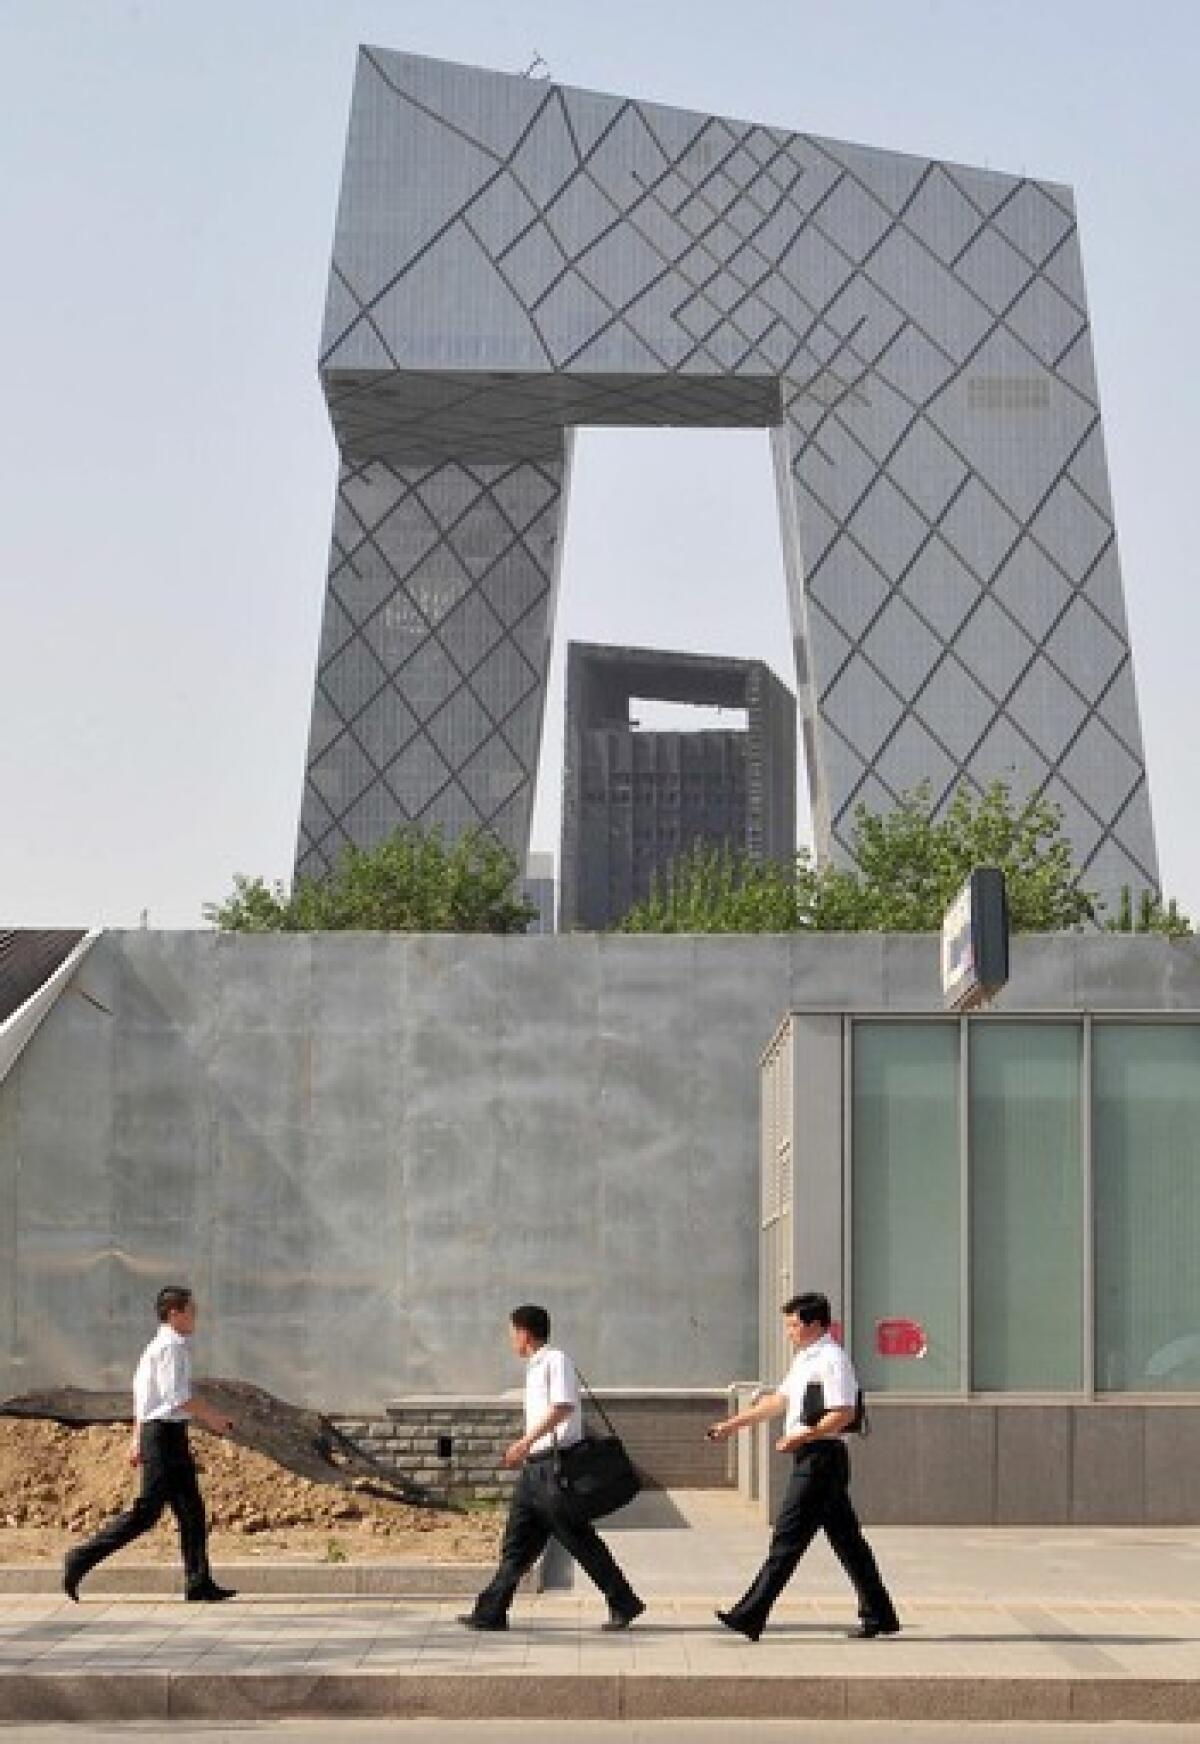 The CCTV Tower in Beijing was designed by Rem Koolhaas and Ole Scheeren.